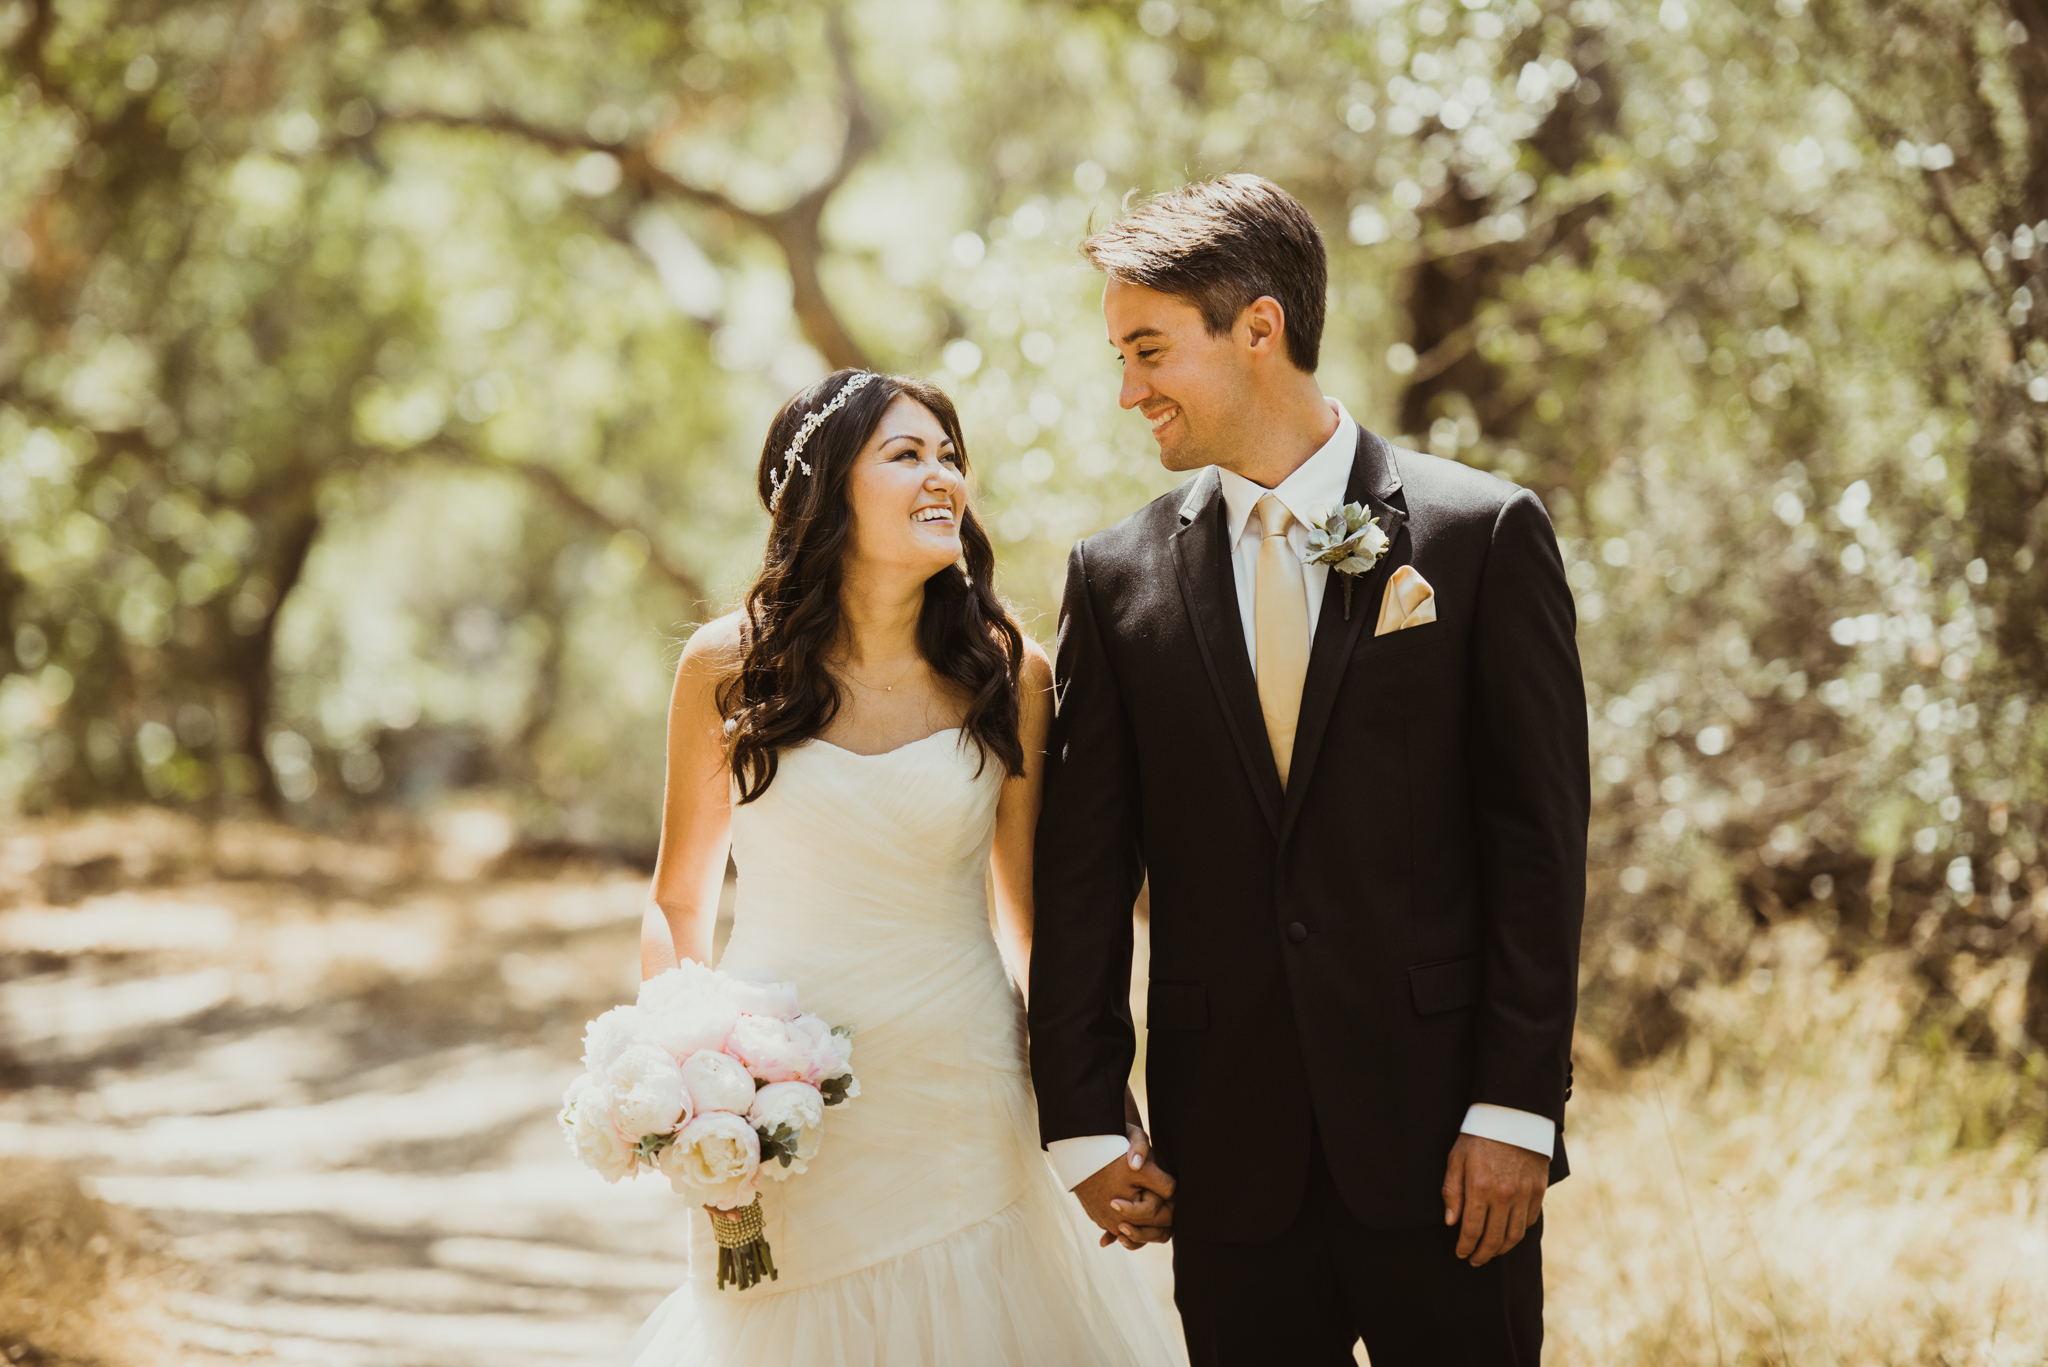 ©Isaiah & Taylor Photography - Inn of the Seventh Ray Wedding, Topanga Canyon California-39.jpg